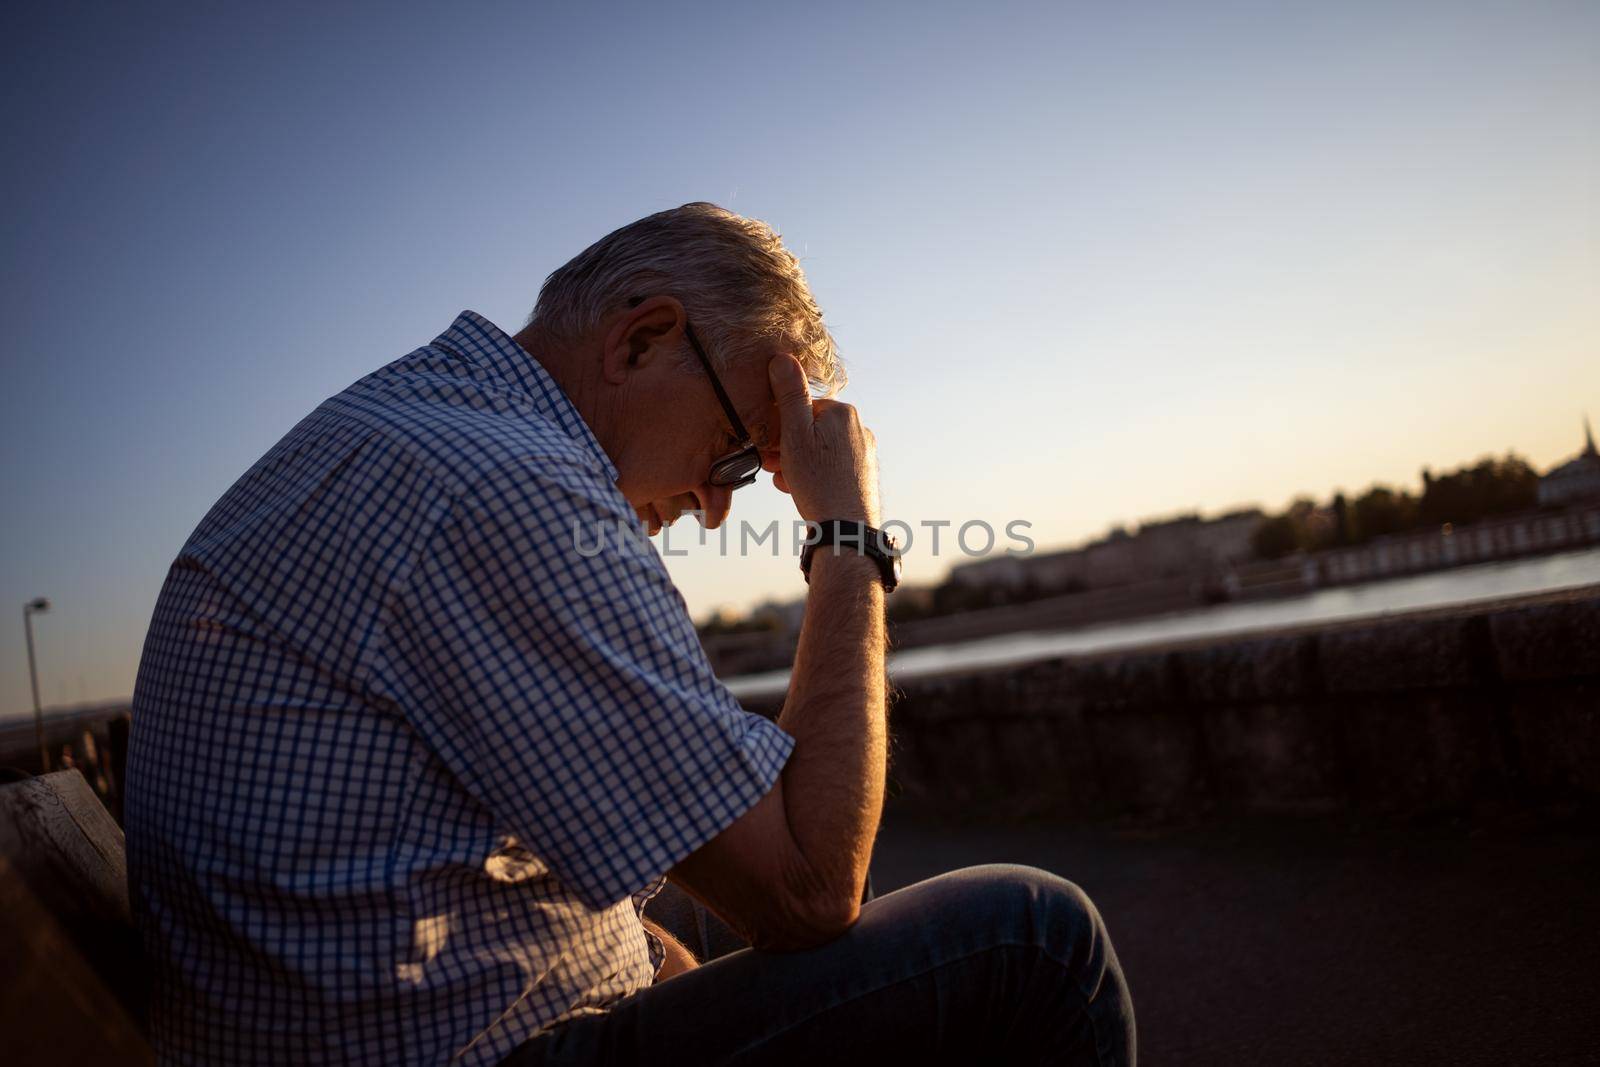 Outdoor portrait of worried and depressed senior man.